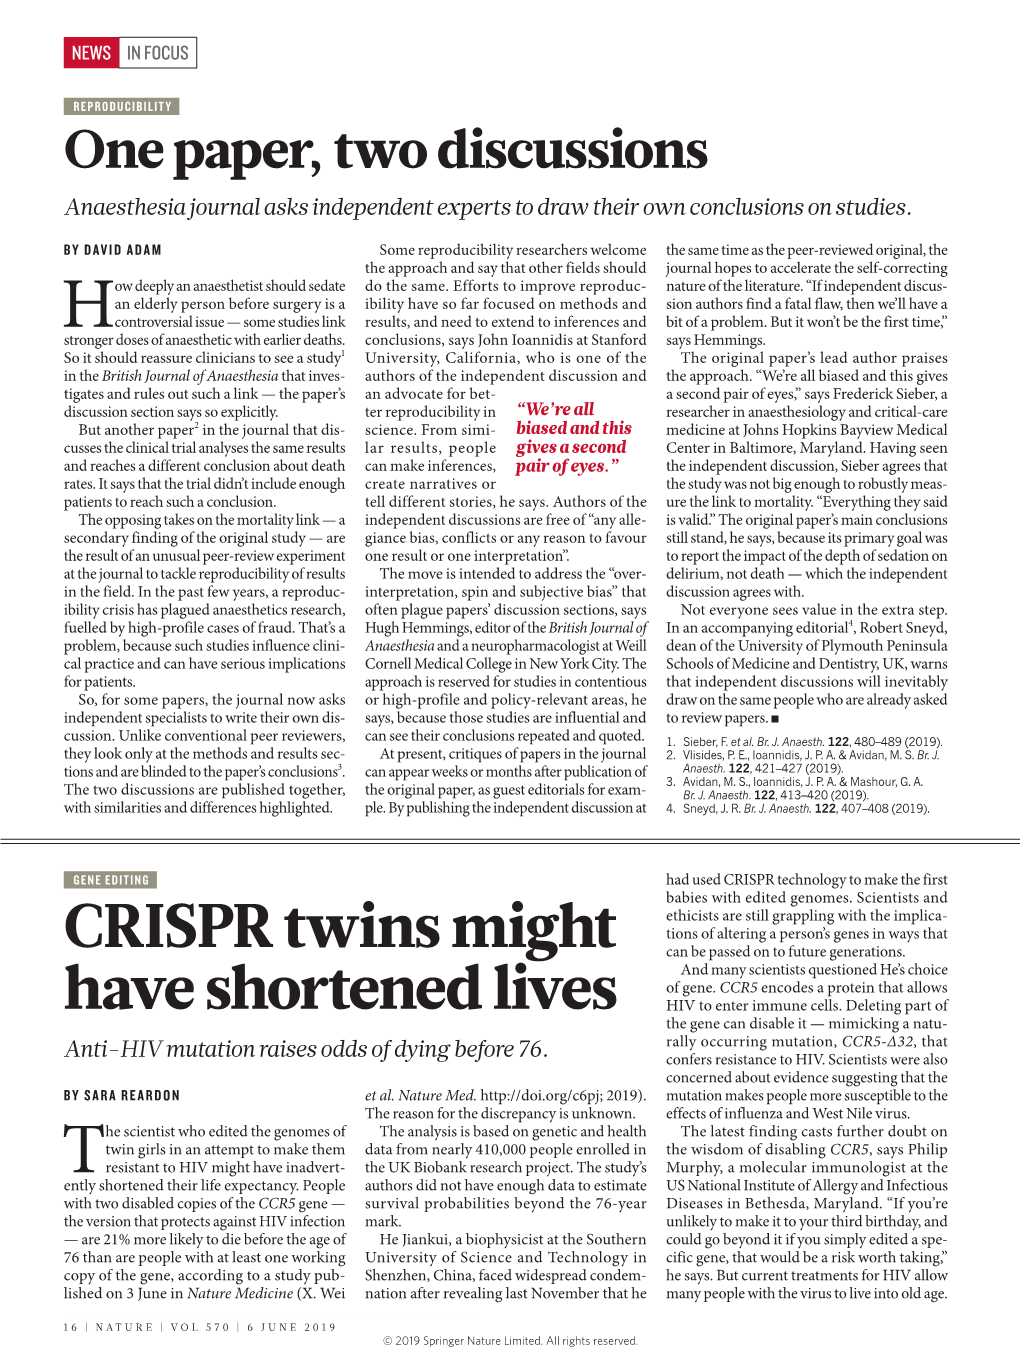 CRISPR Twins Might Have Shortened Lives